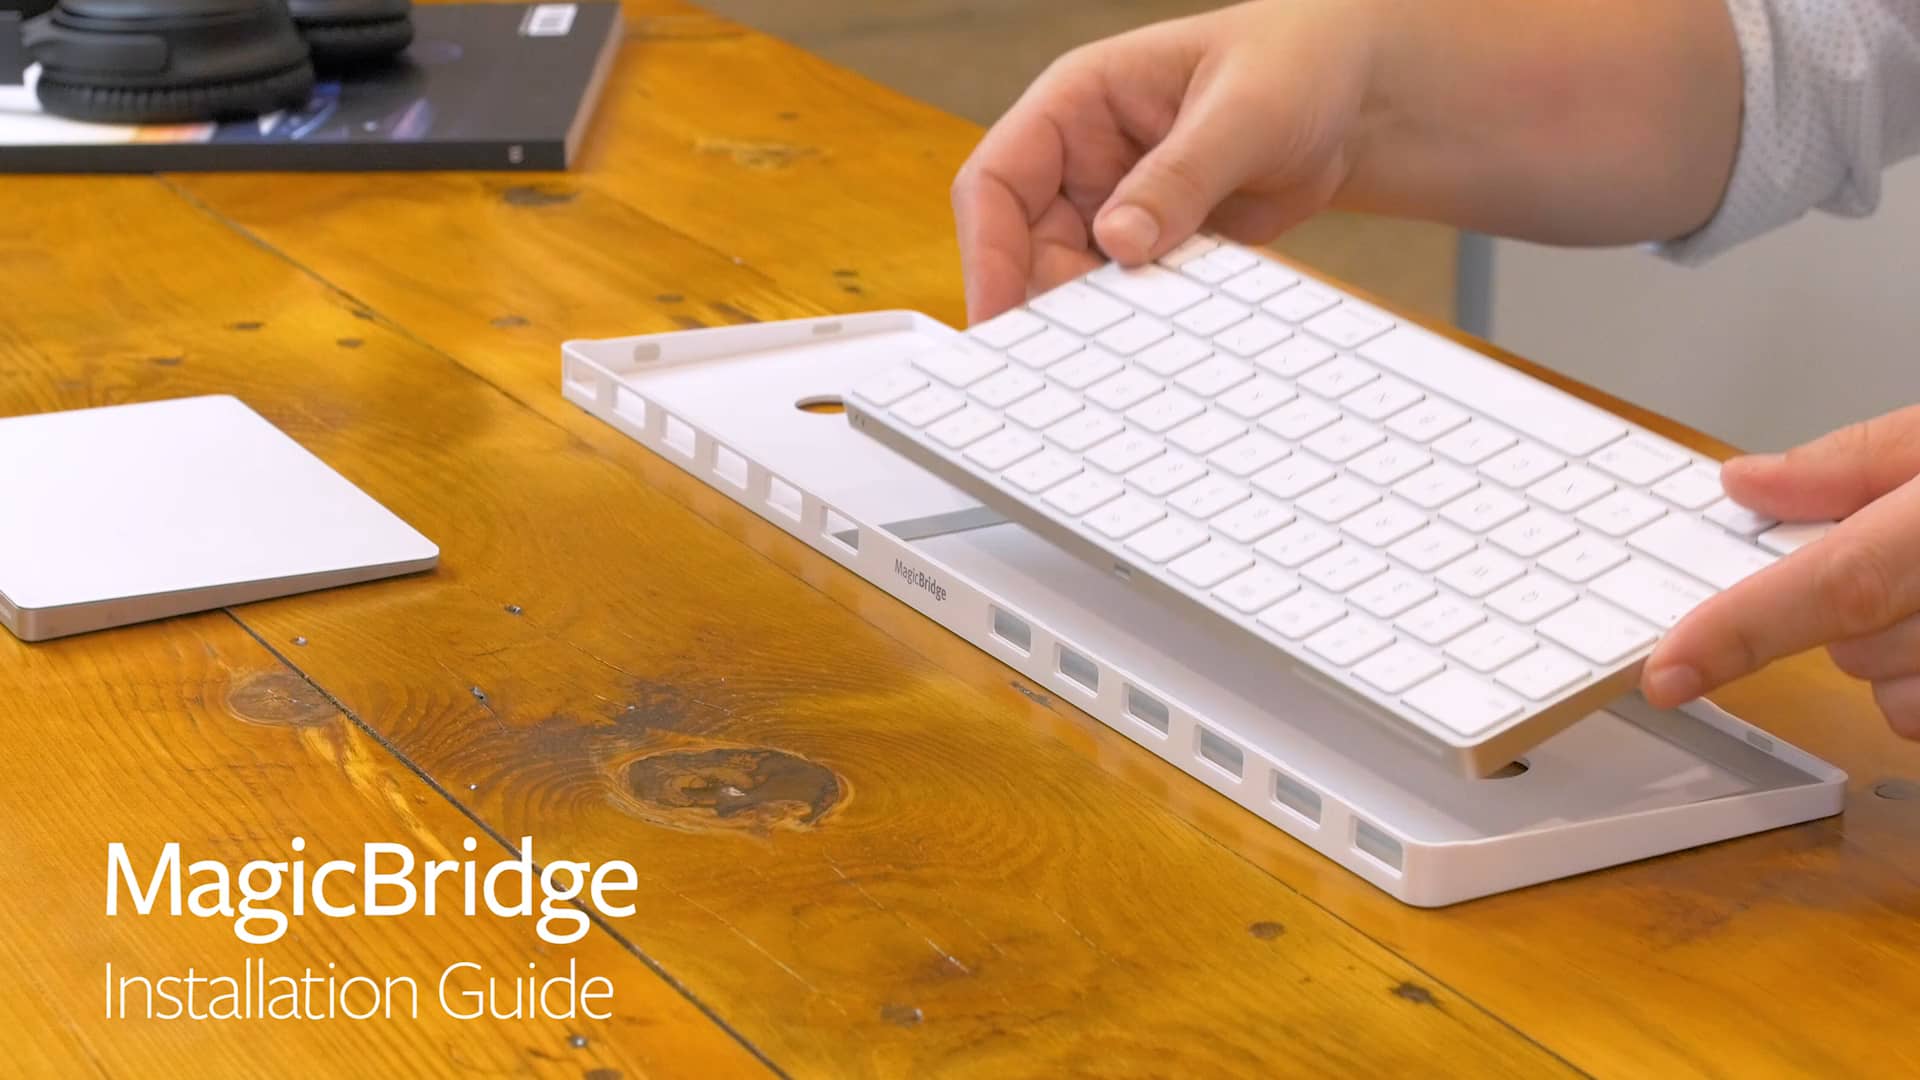 MagicBridge for Apple Magic Trackpad 2 & Magic Keyboard on Vimeo